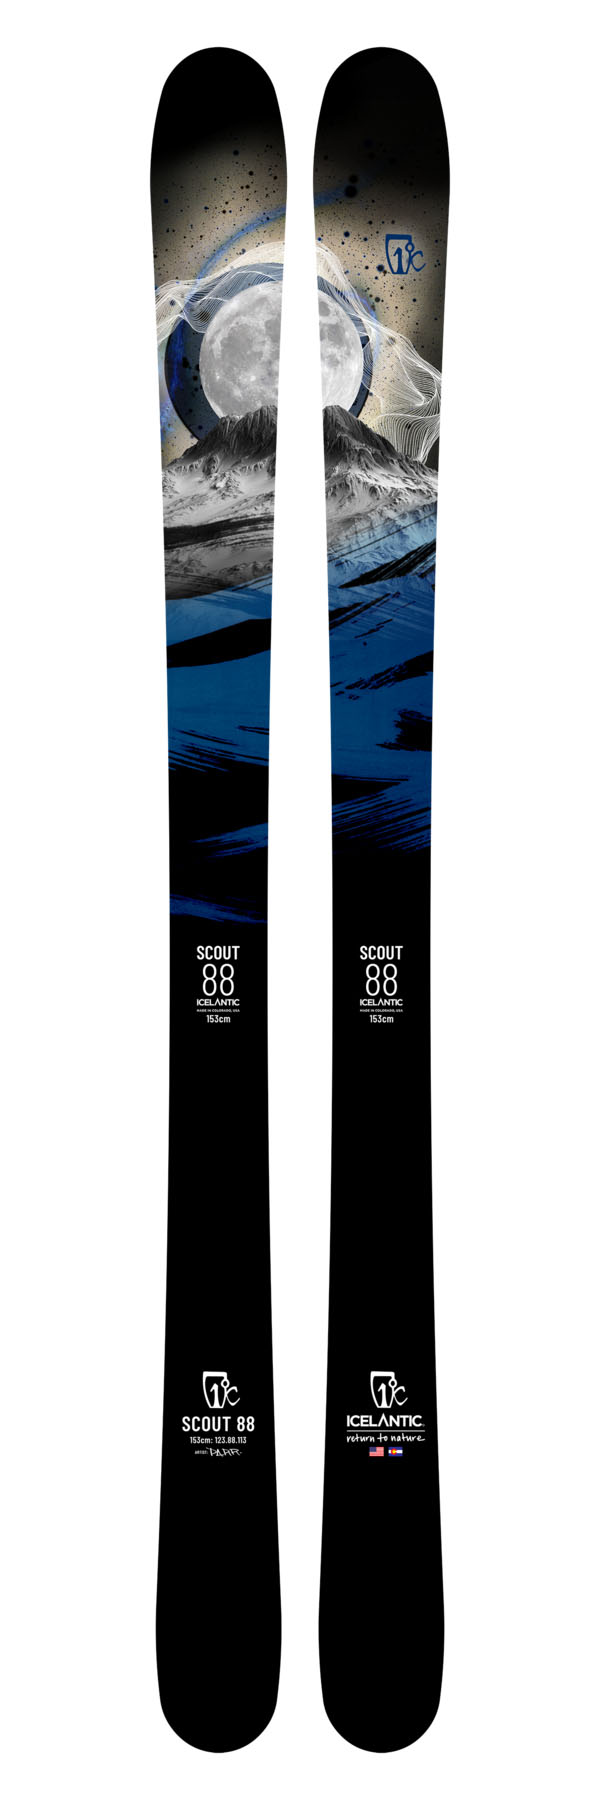 Лыжи для фрирайда Icelantic Scout 88 2021/2022